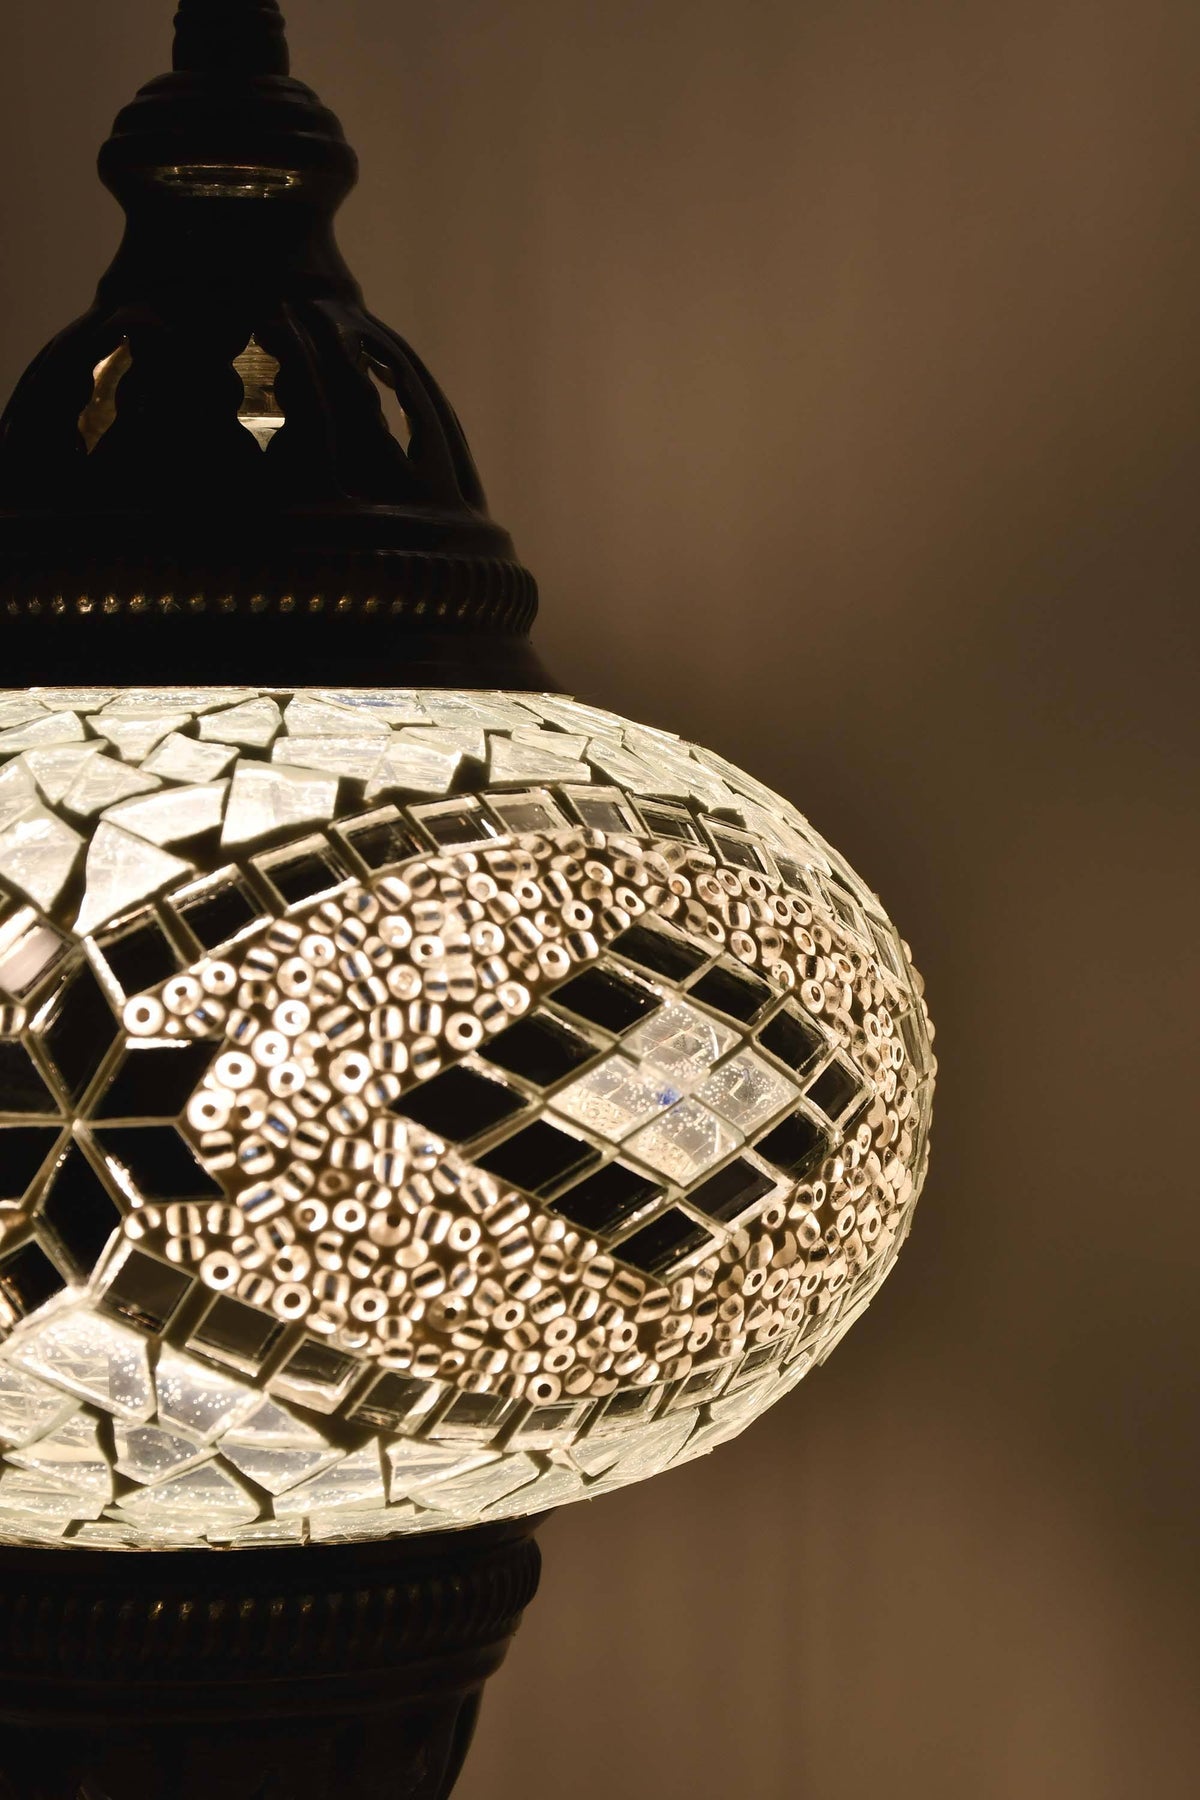 Turkish Mosaic Table Lamp White Diamond Beads Lighting Sydney Grand Bazaar 